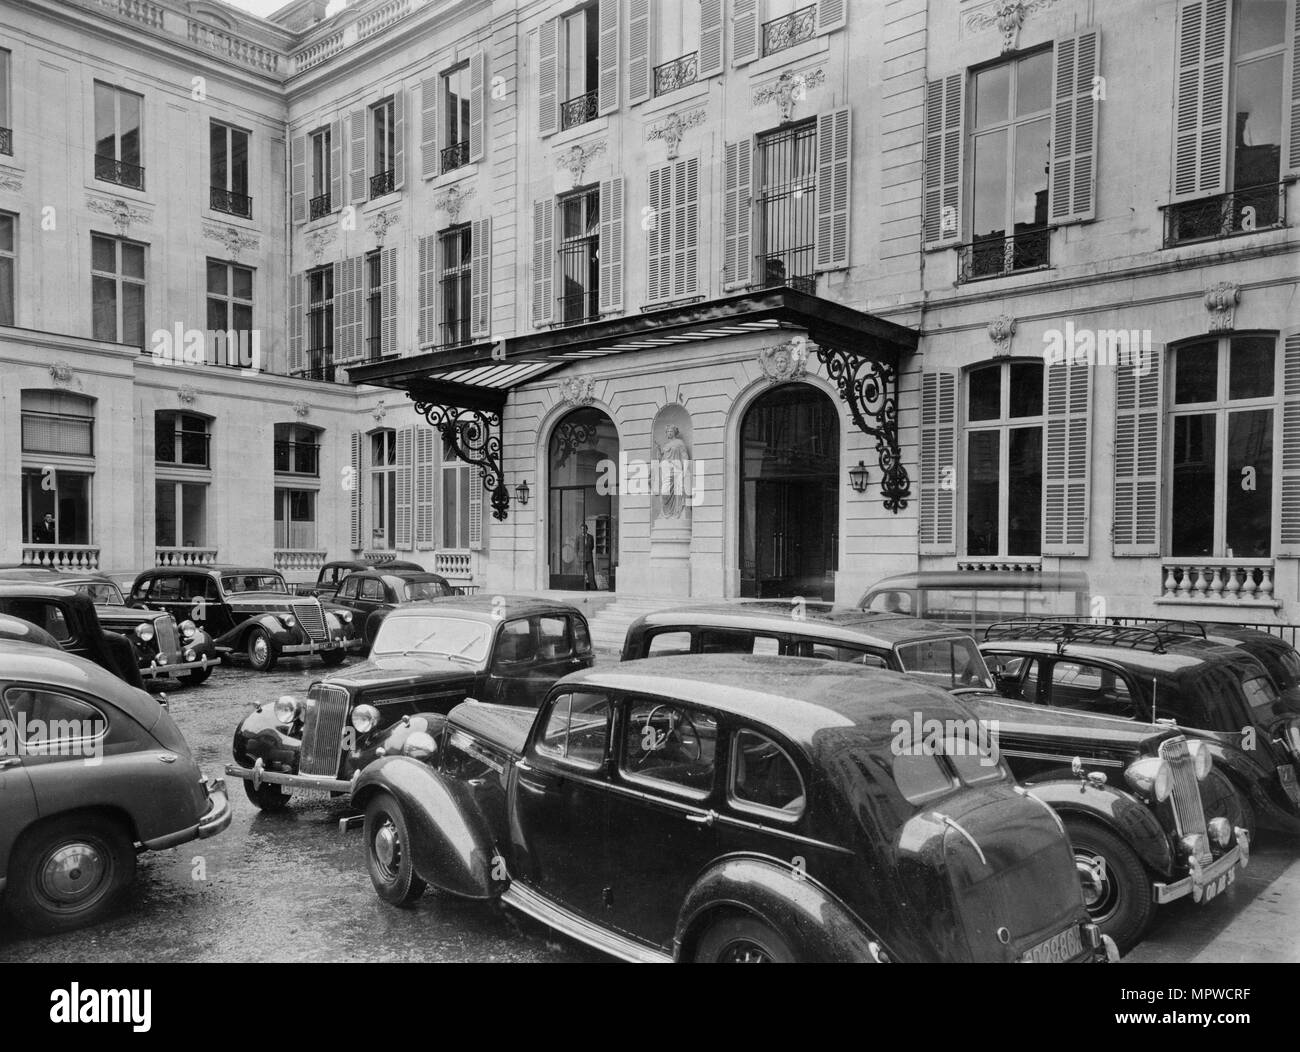 British embassy paris hi-res stock photography and images - Alamy